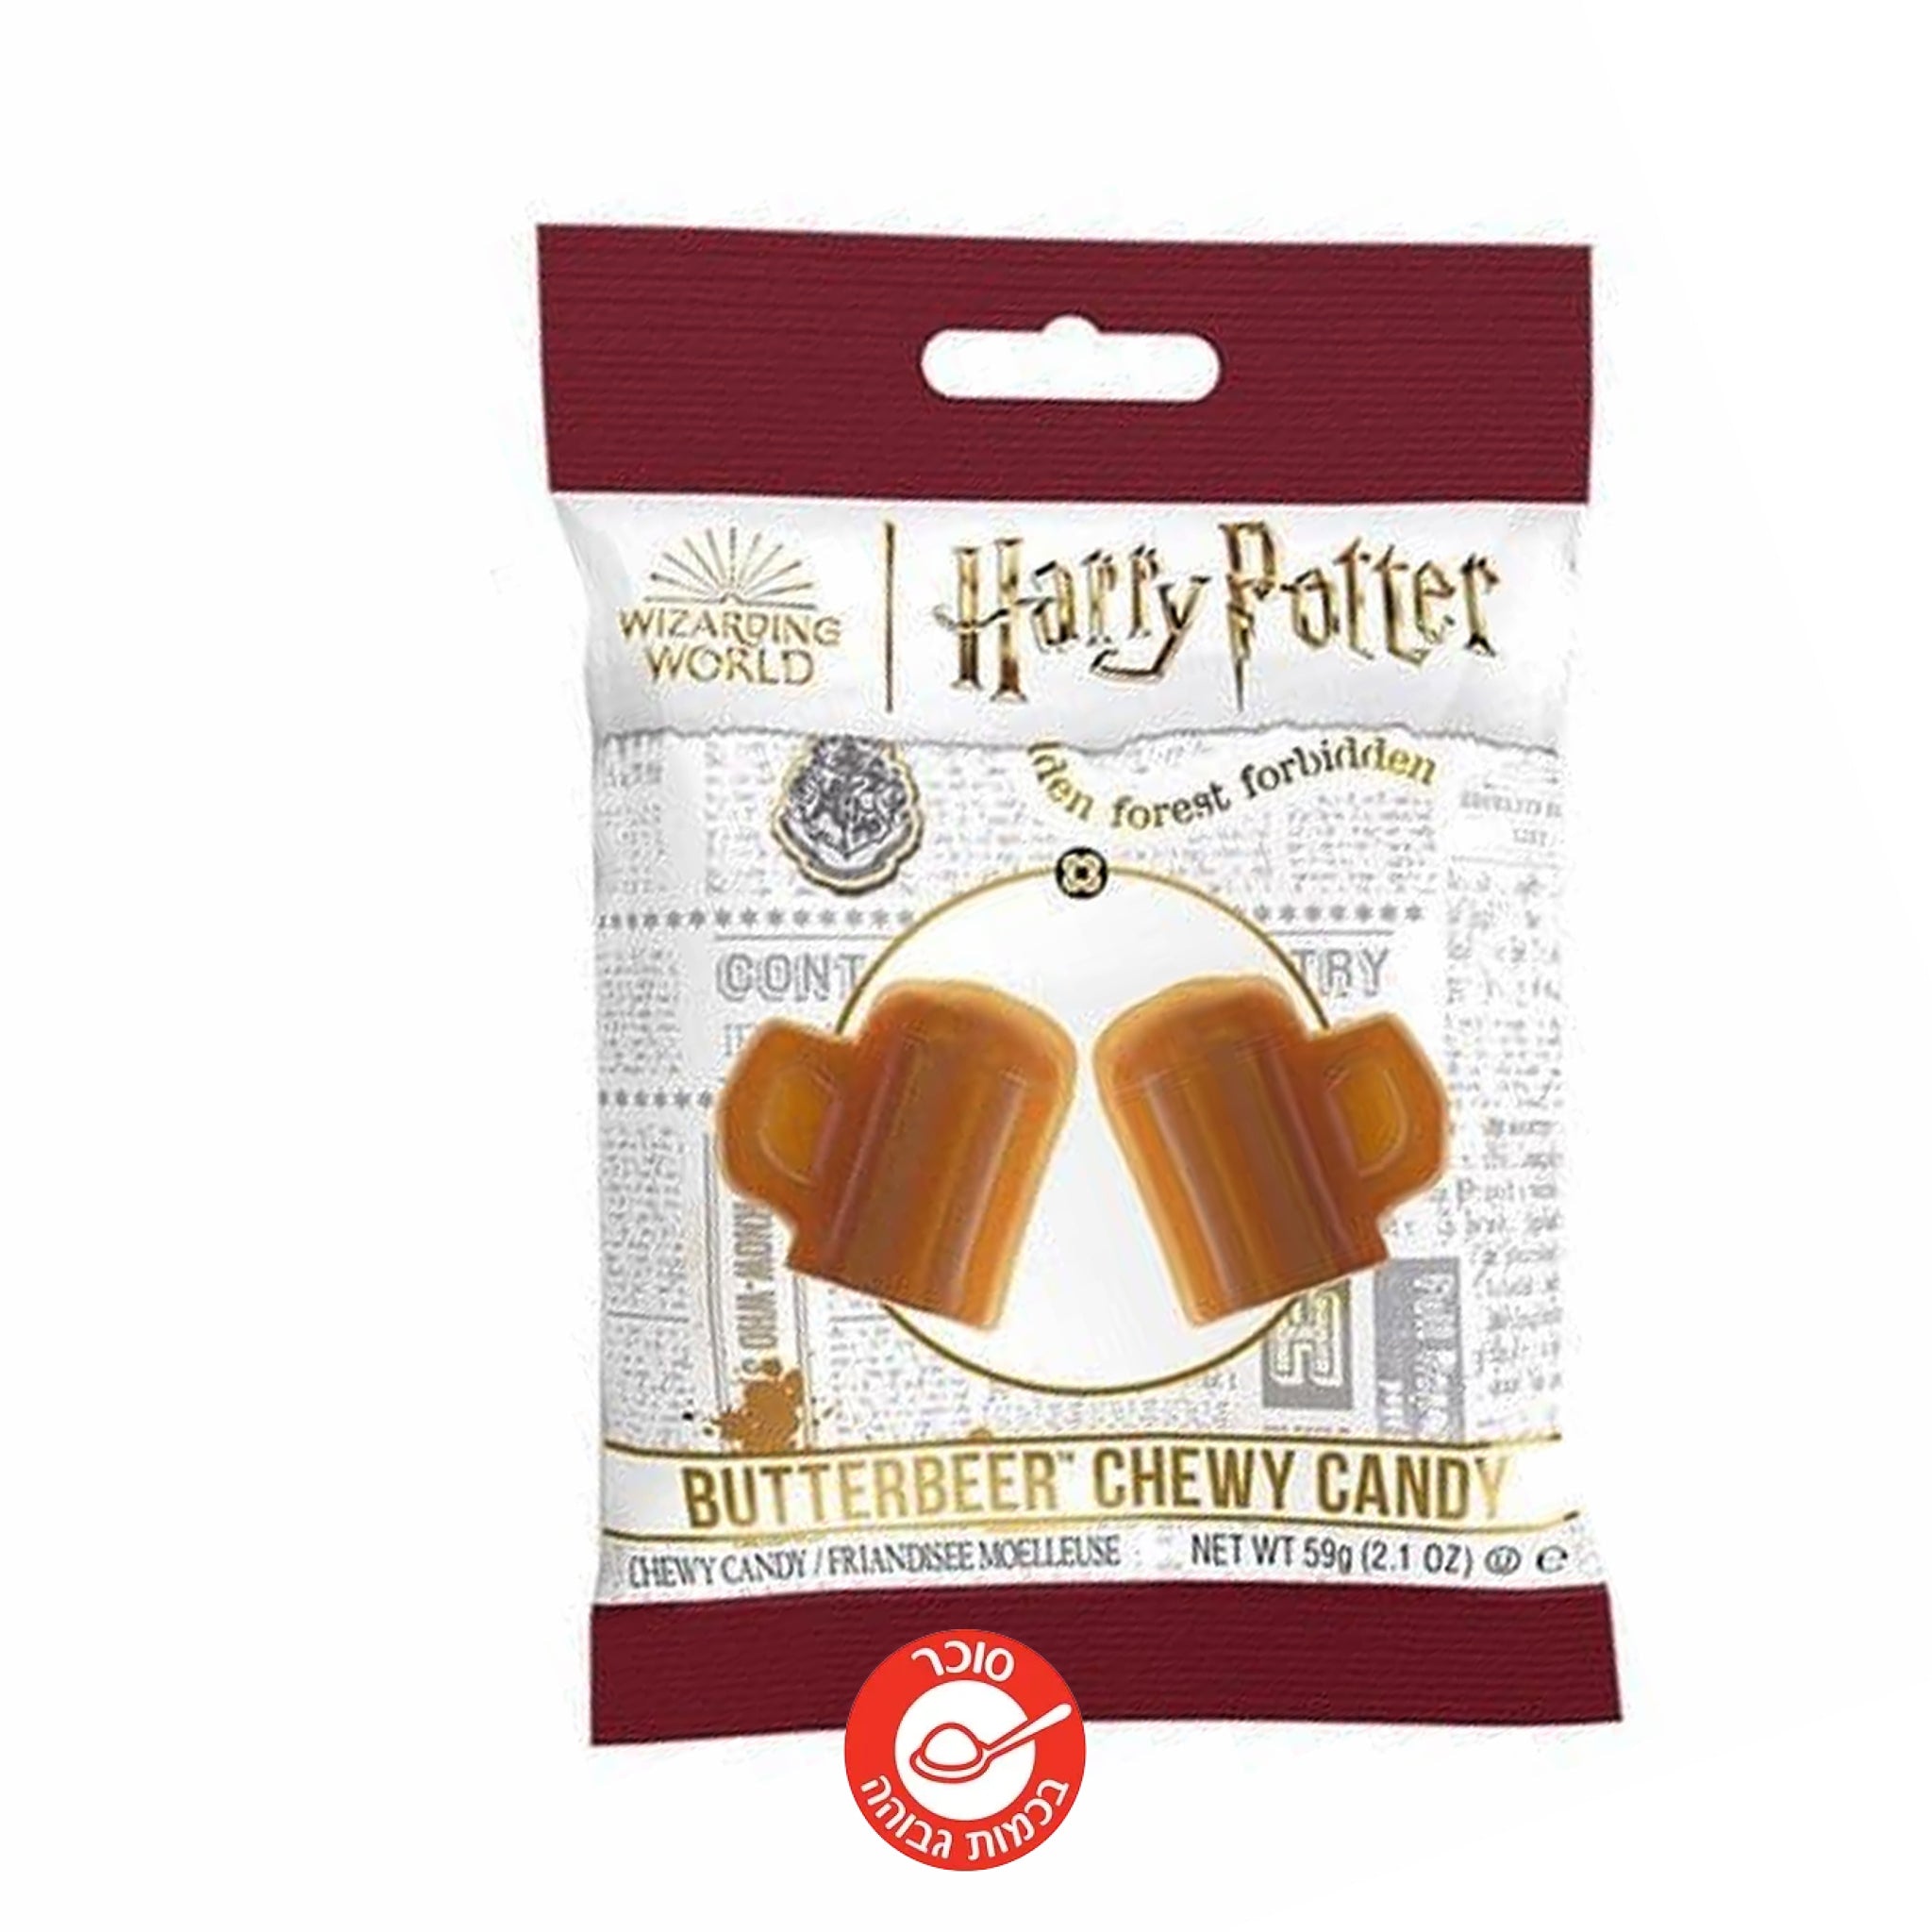 Harry Potter Butterbeer Chewy Candies סוכריות חמאה רכות בצורת בירה הארי פוטר